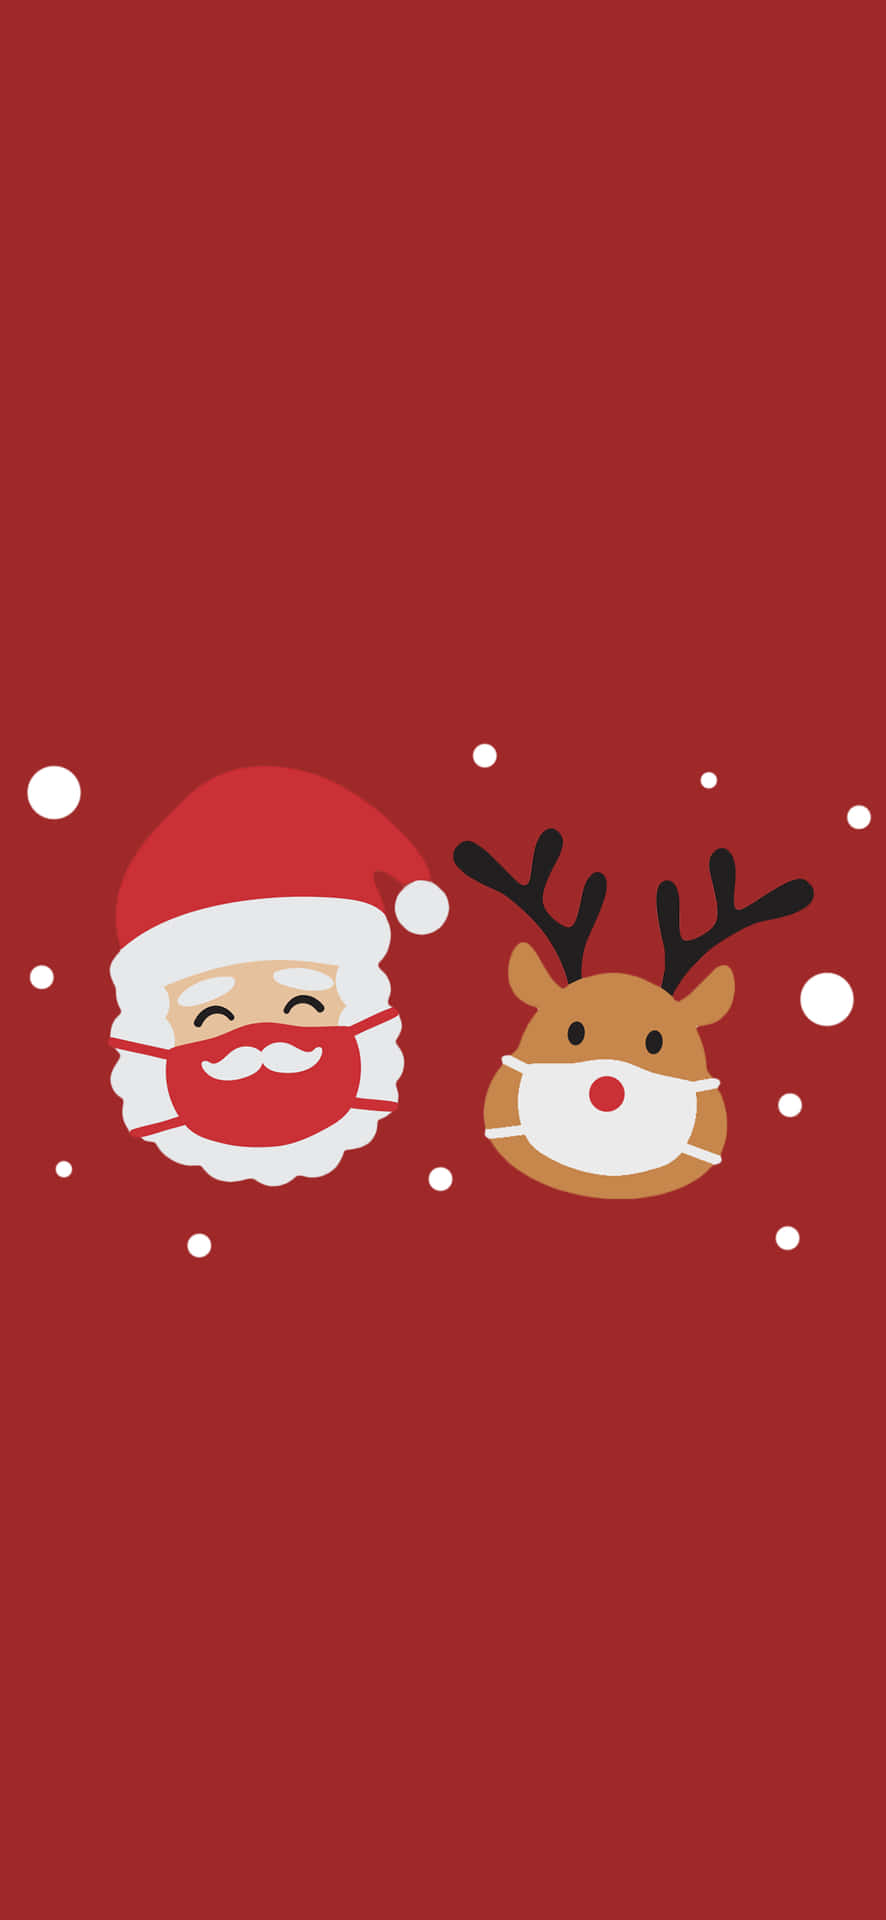 Cute Simple Christmas Santa Claus Wallpaper